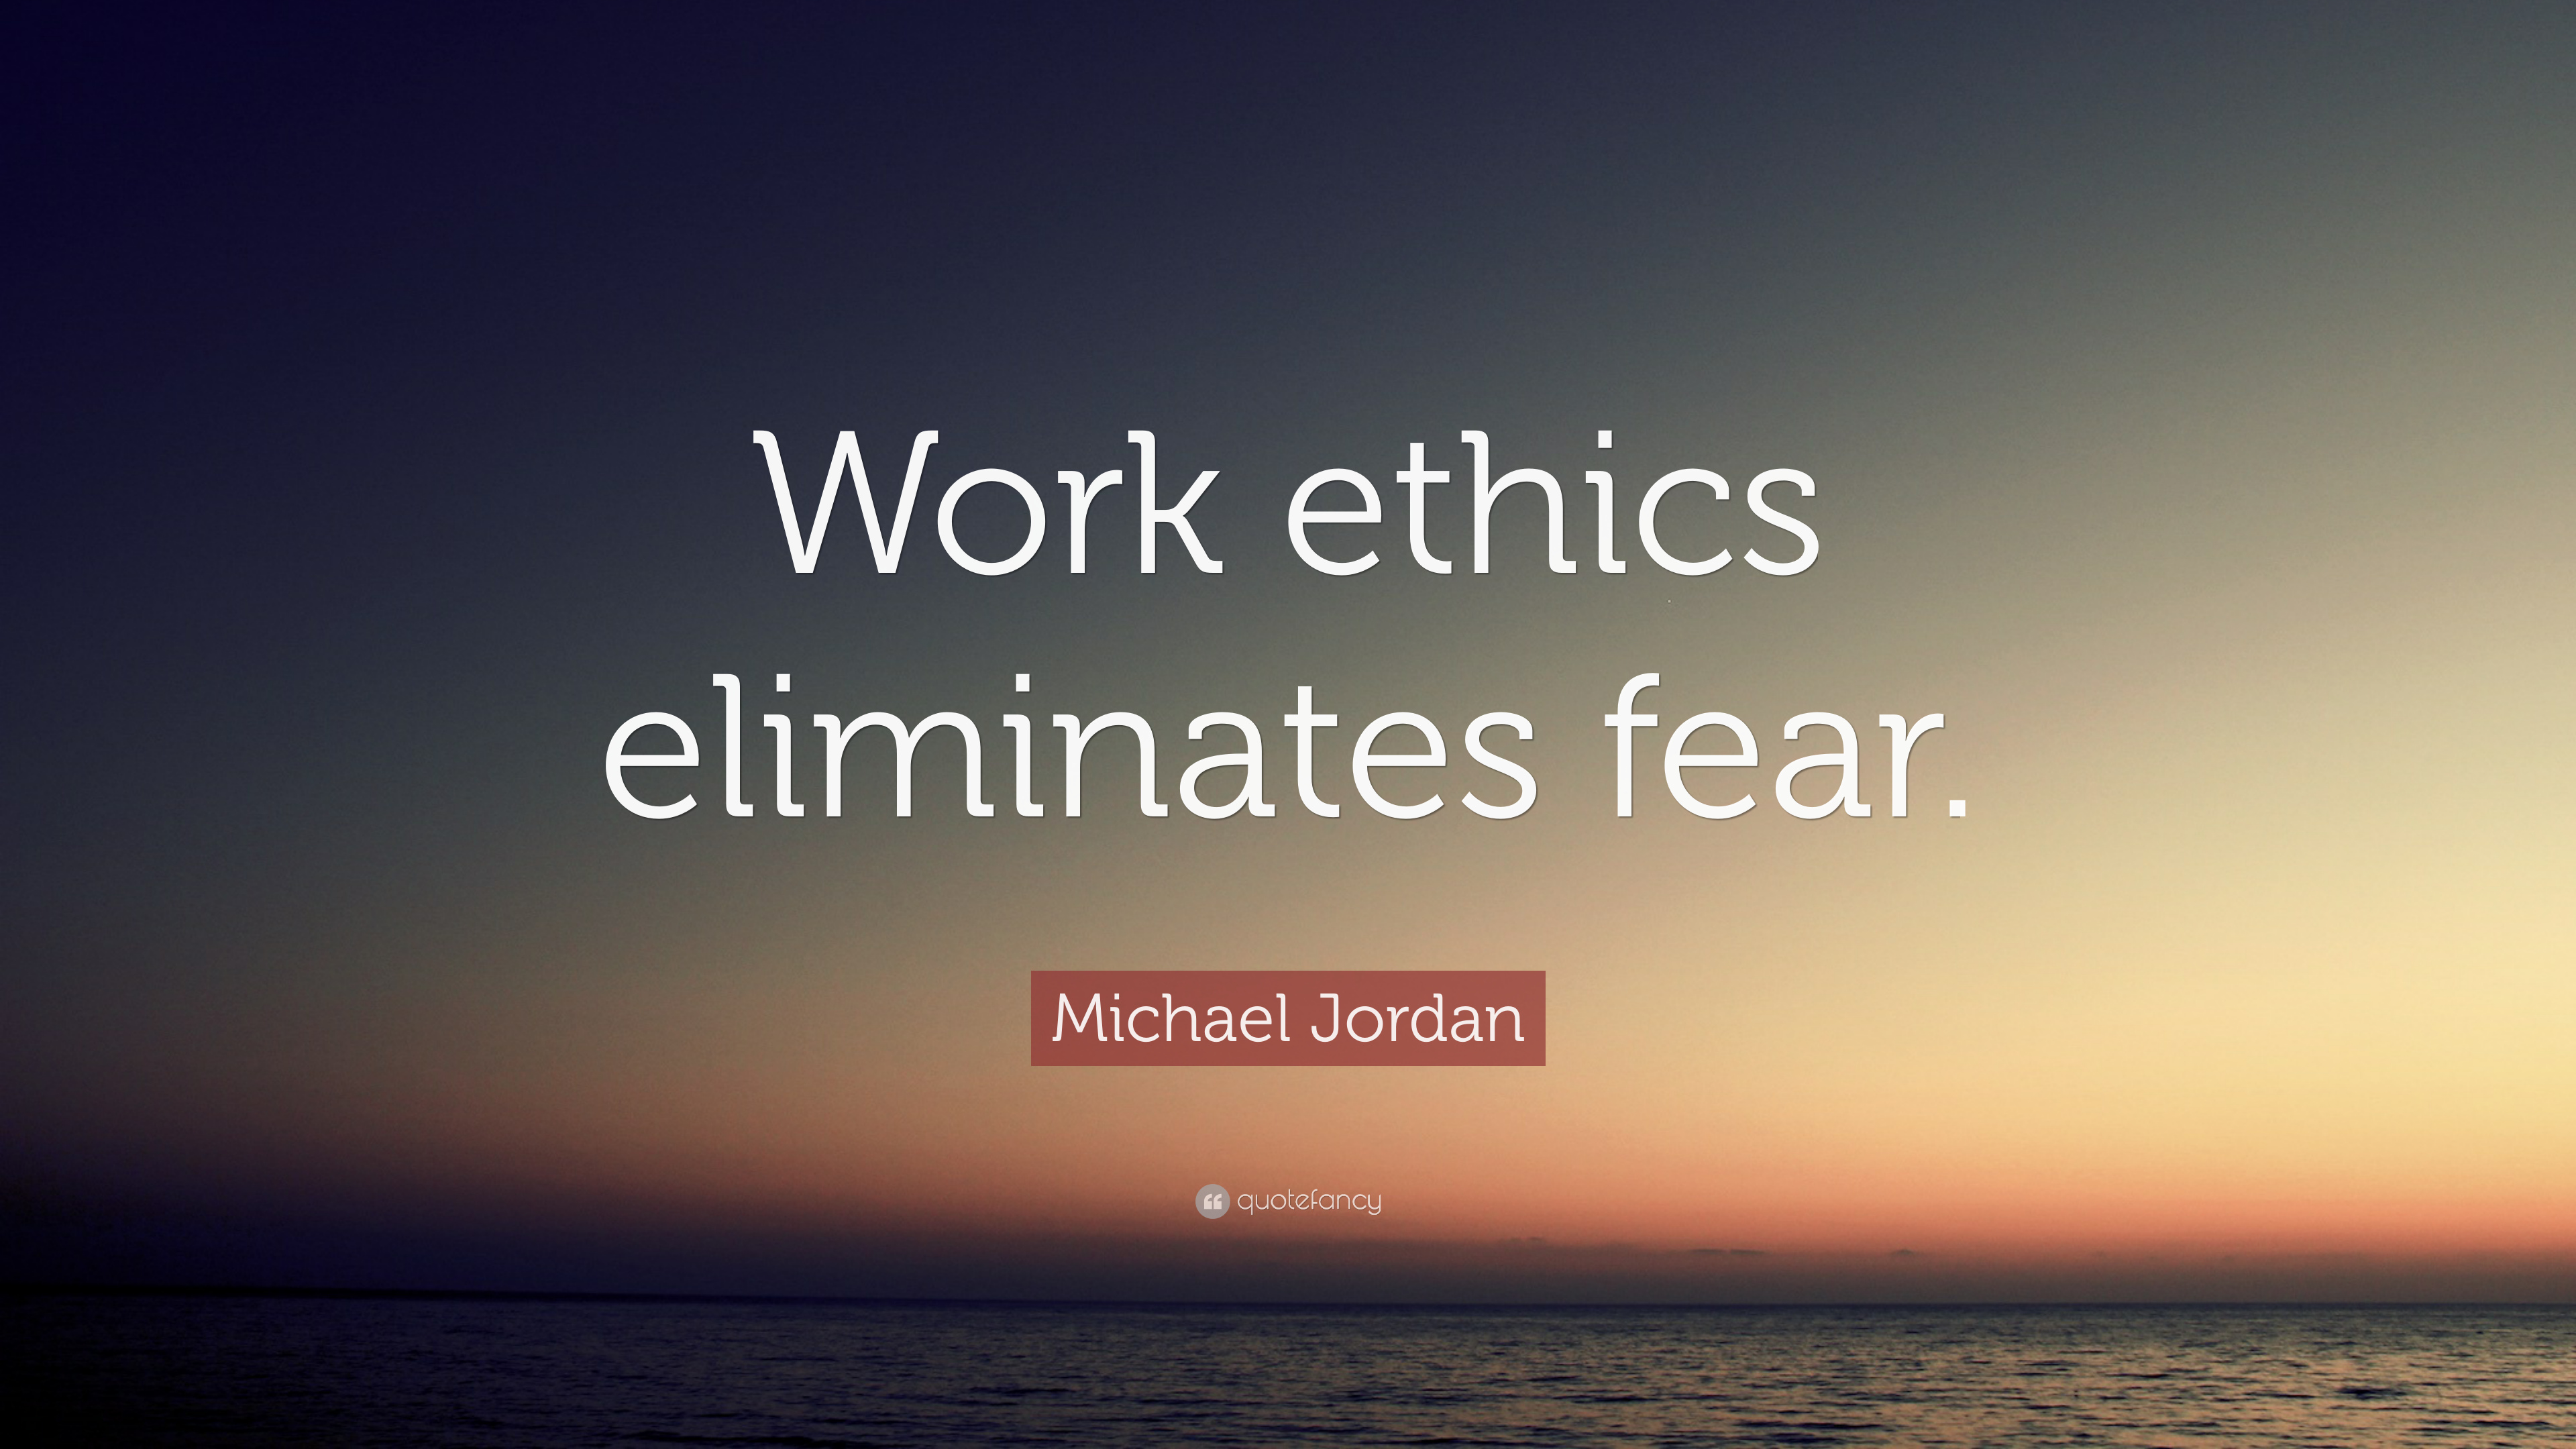 Michael Jordan Quote: “Work ethics eliminates fear.”